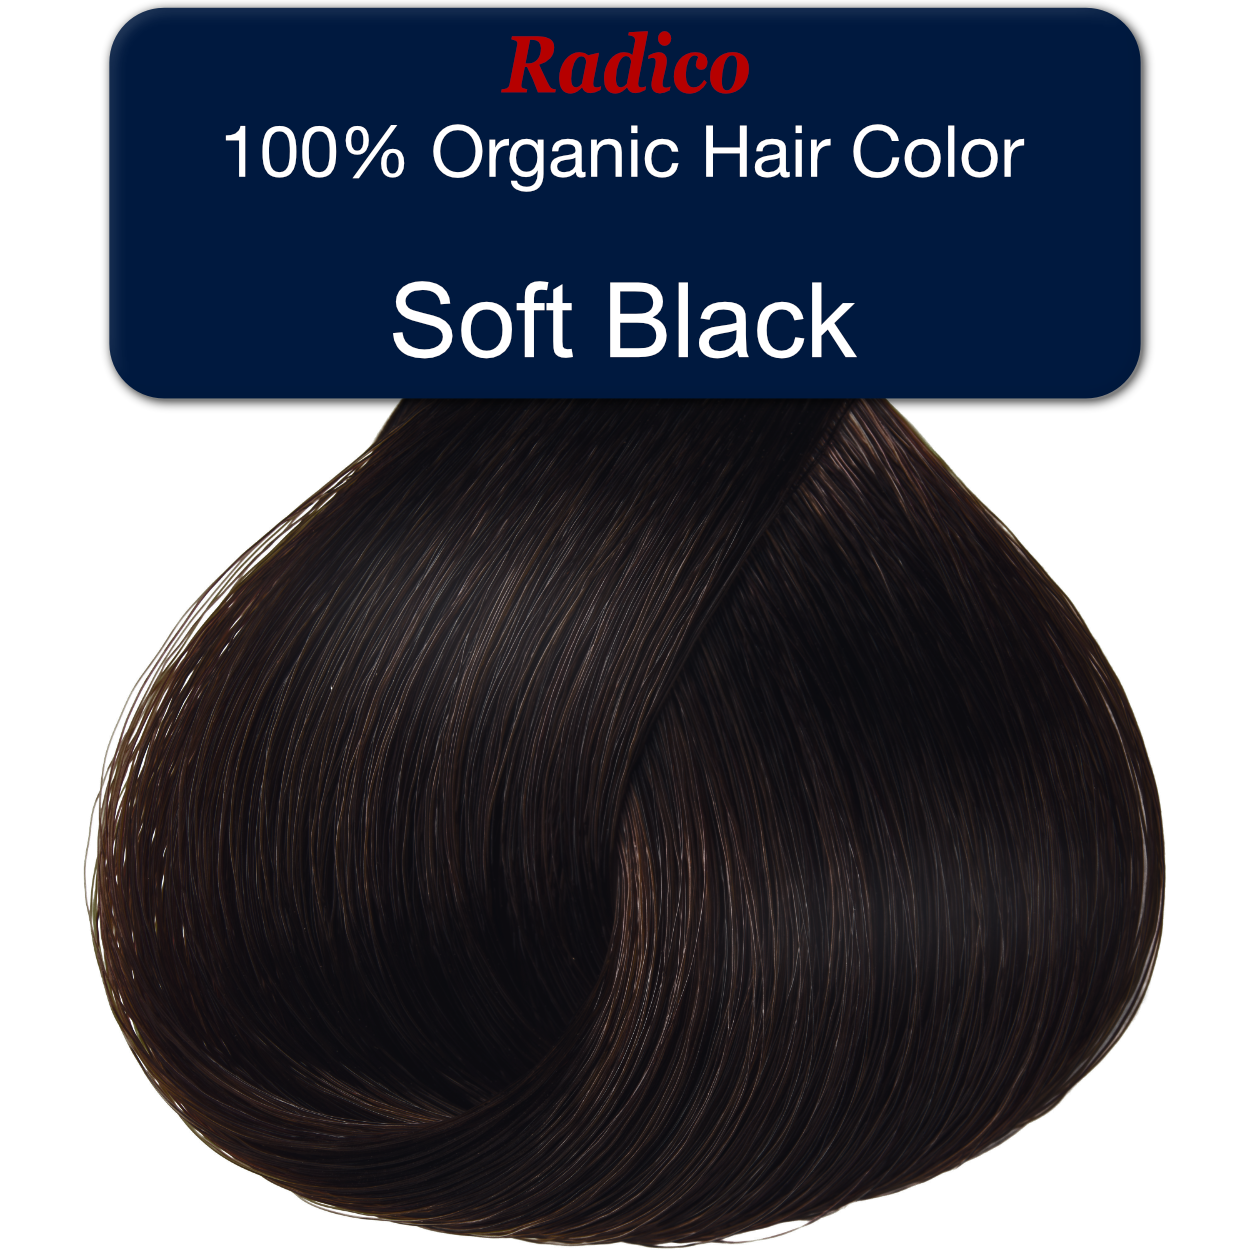 100% Organic Hair Color. Soft Black Color sample.